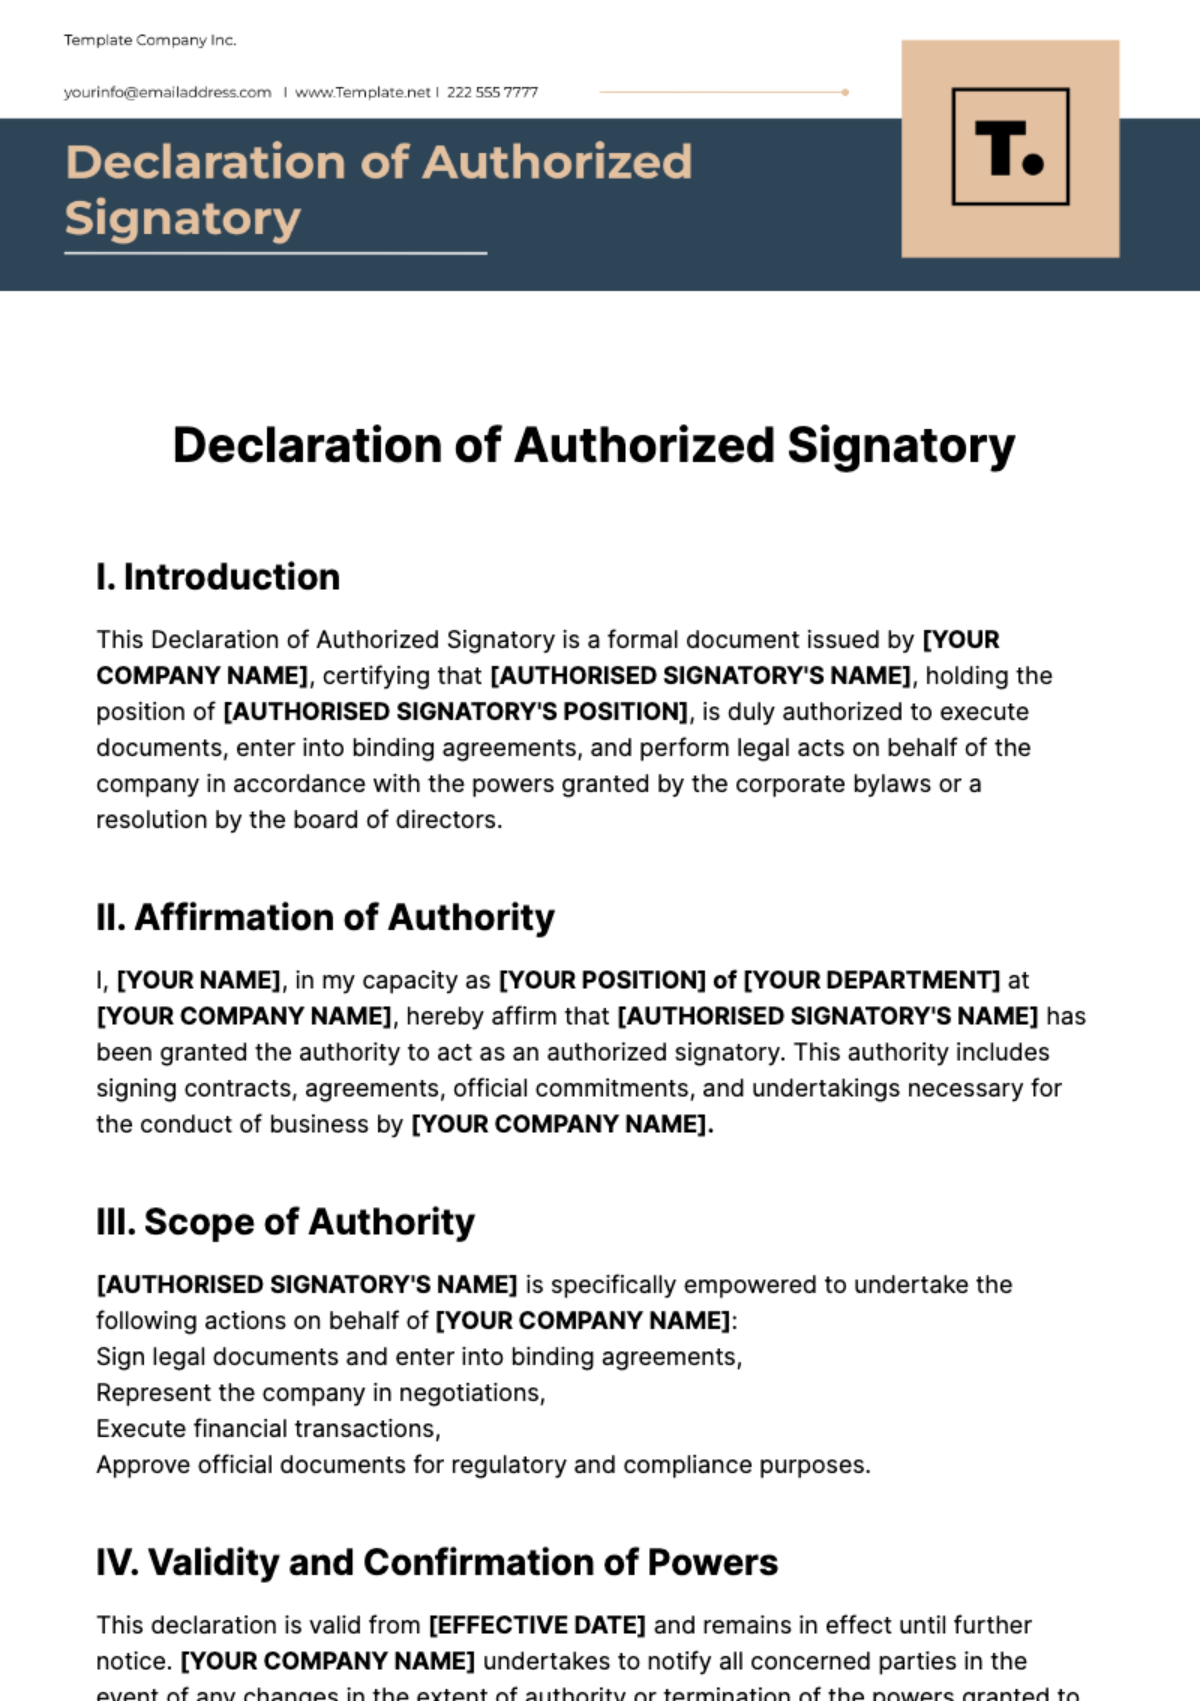 Free Declaration of Authorized Signatory Template